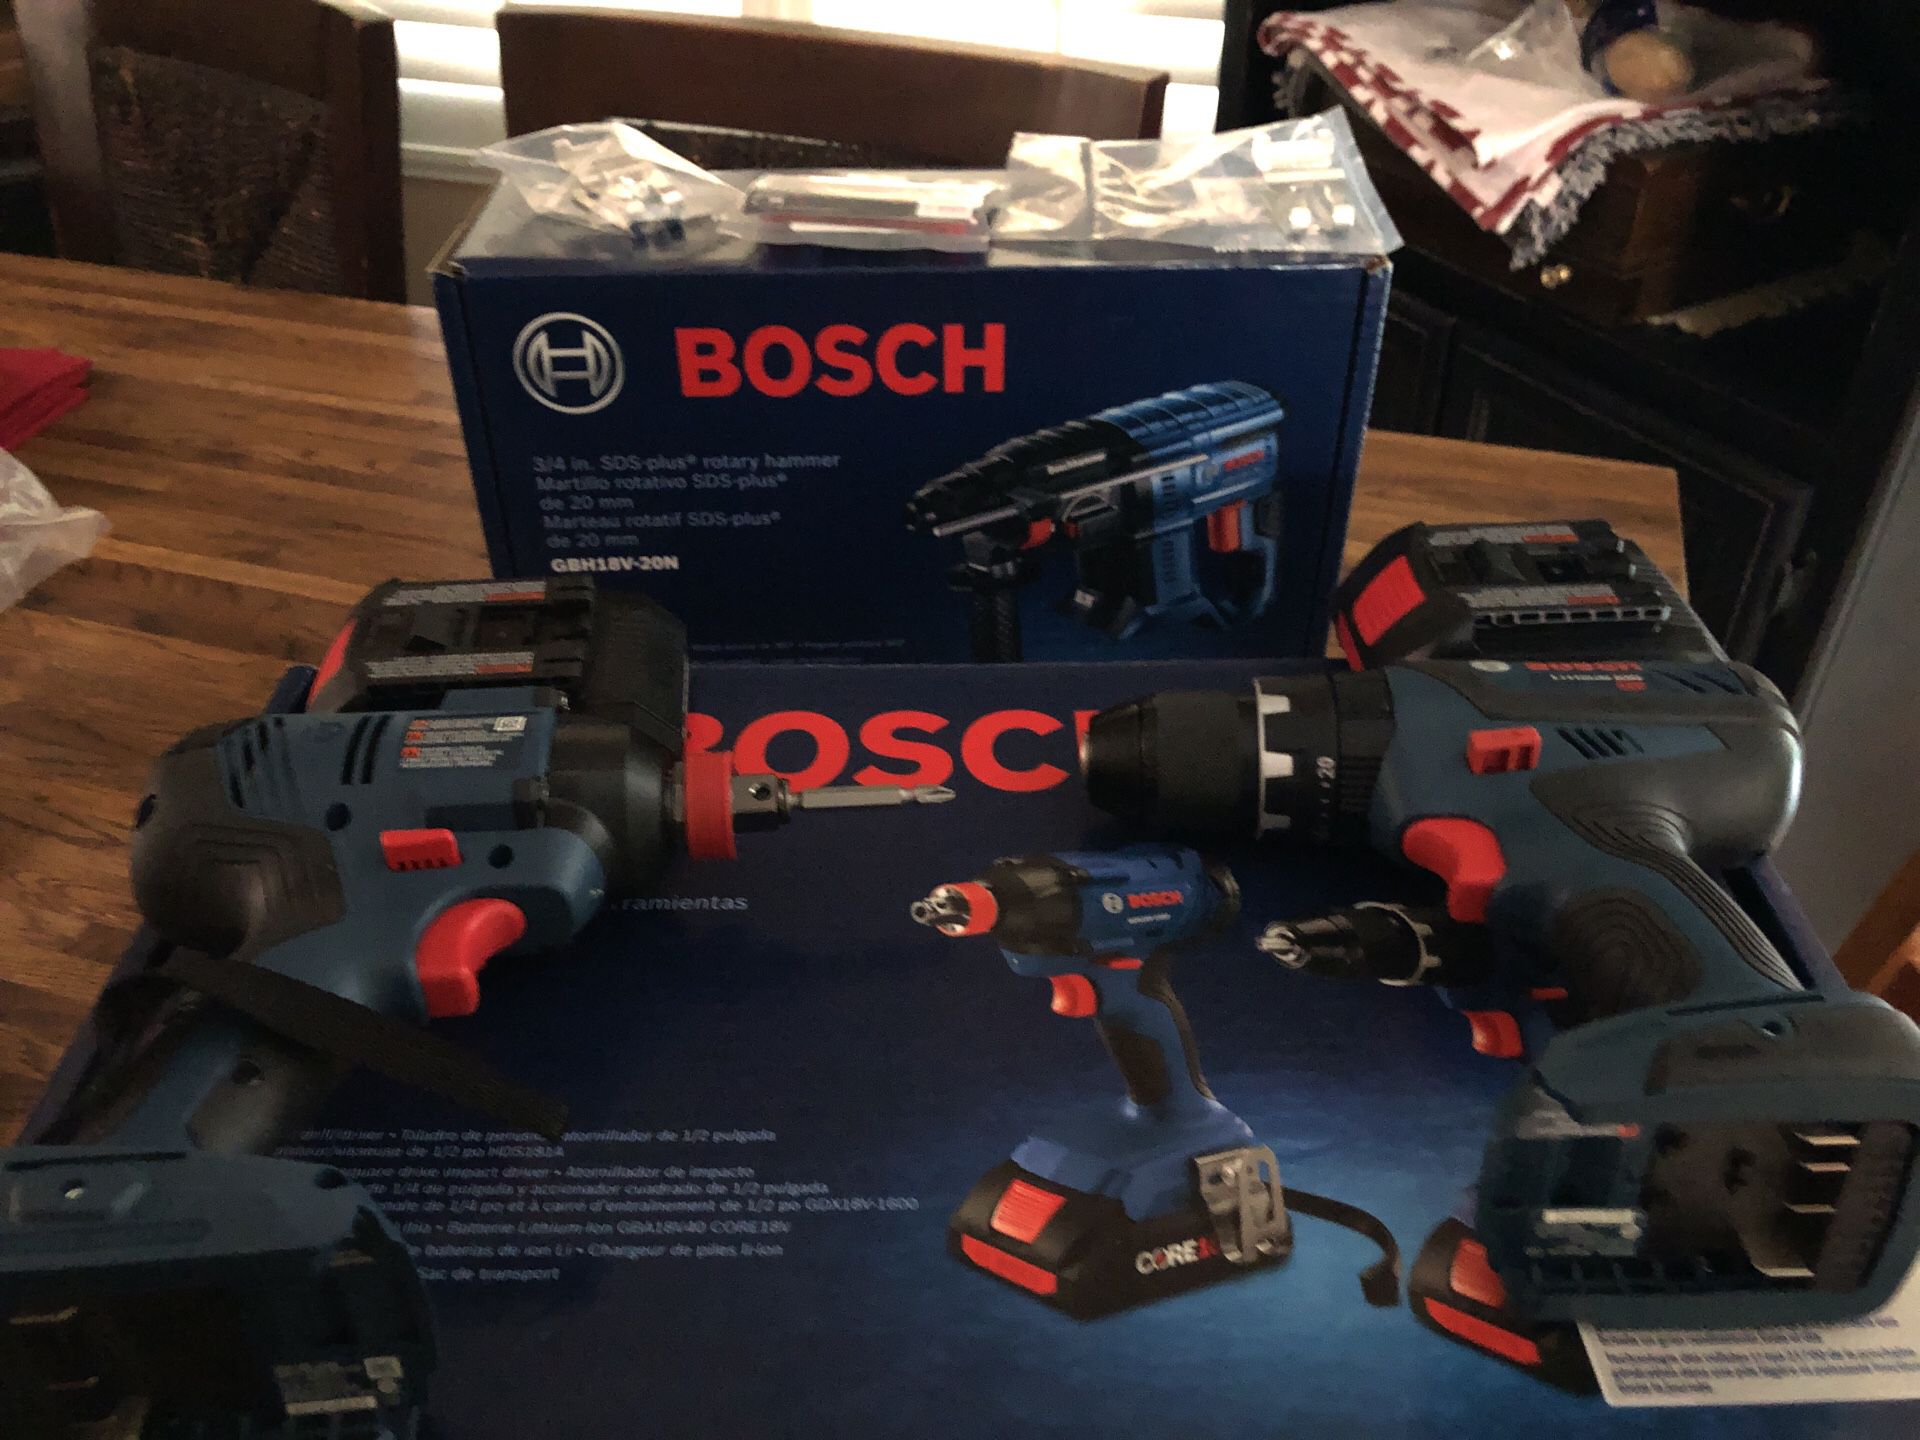 New Bosch cordless tools